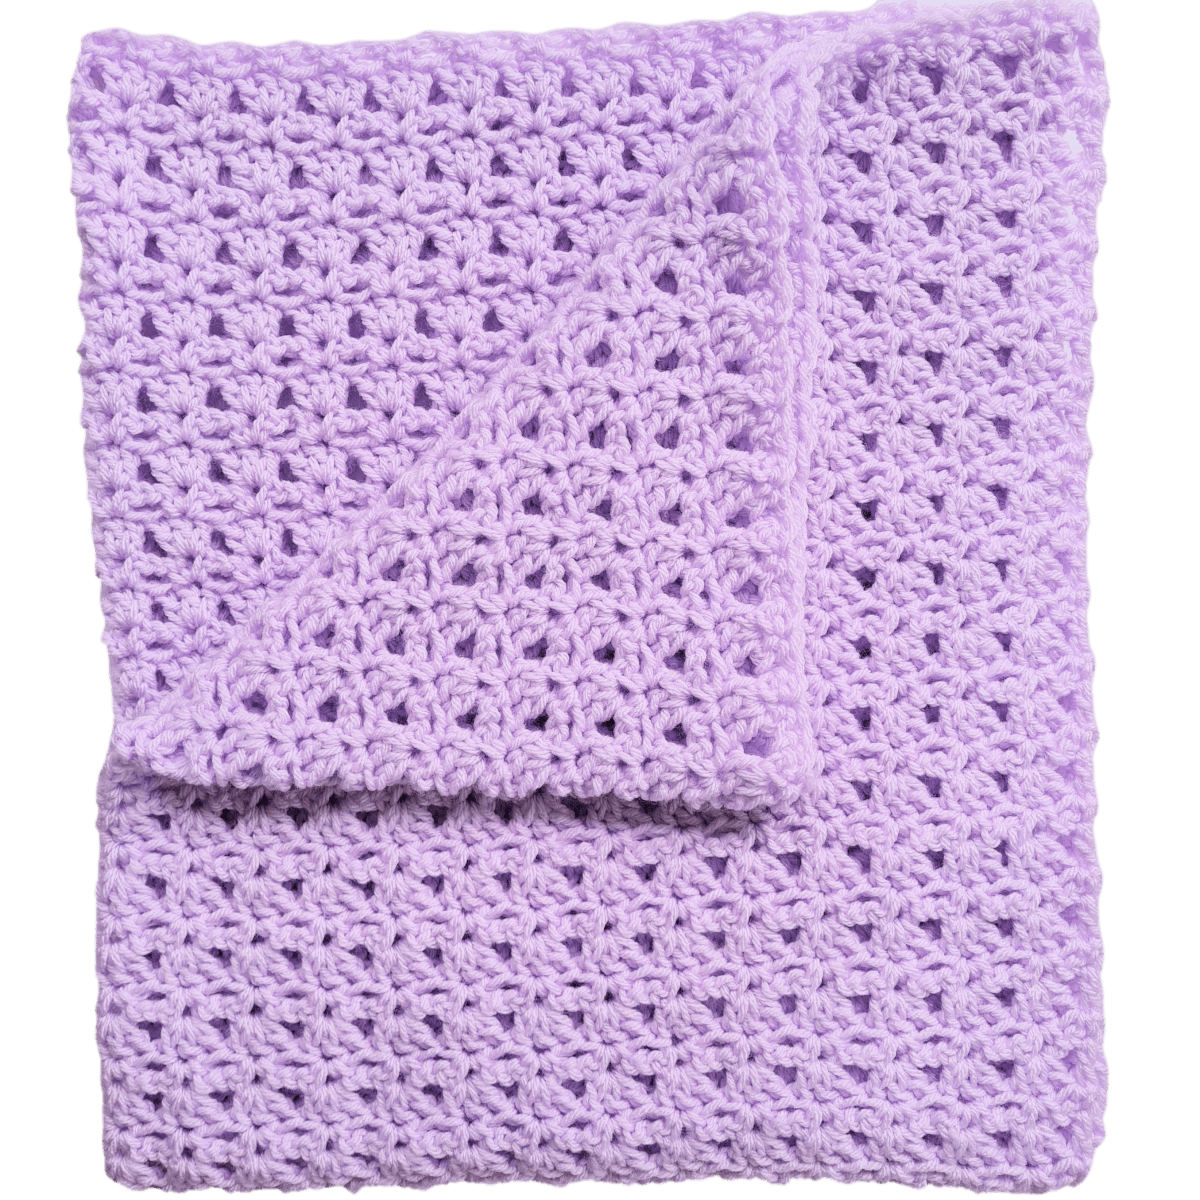 Coronation Crochet Baby Blanket - The Secret Yarnery